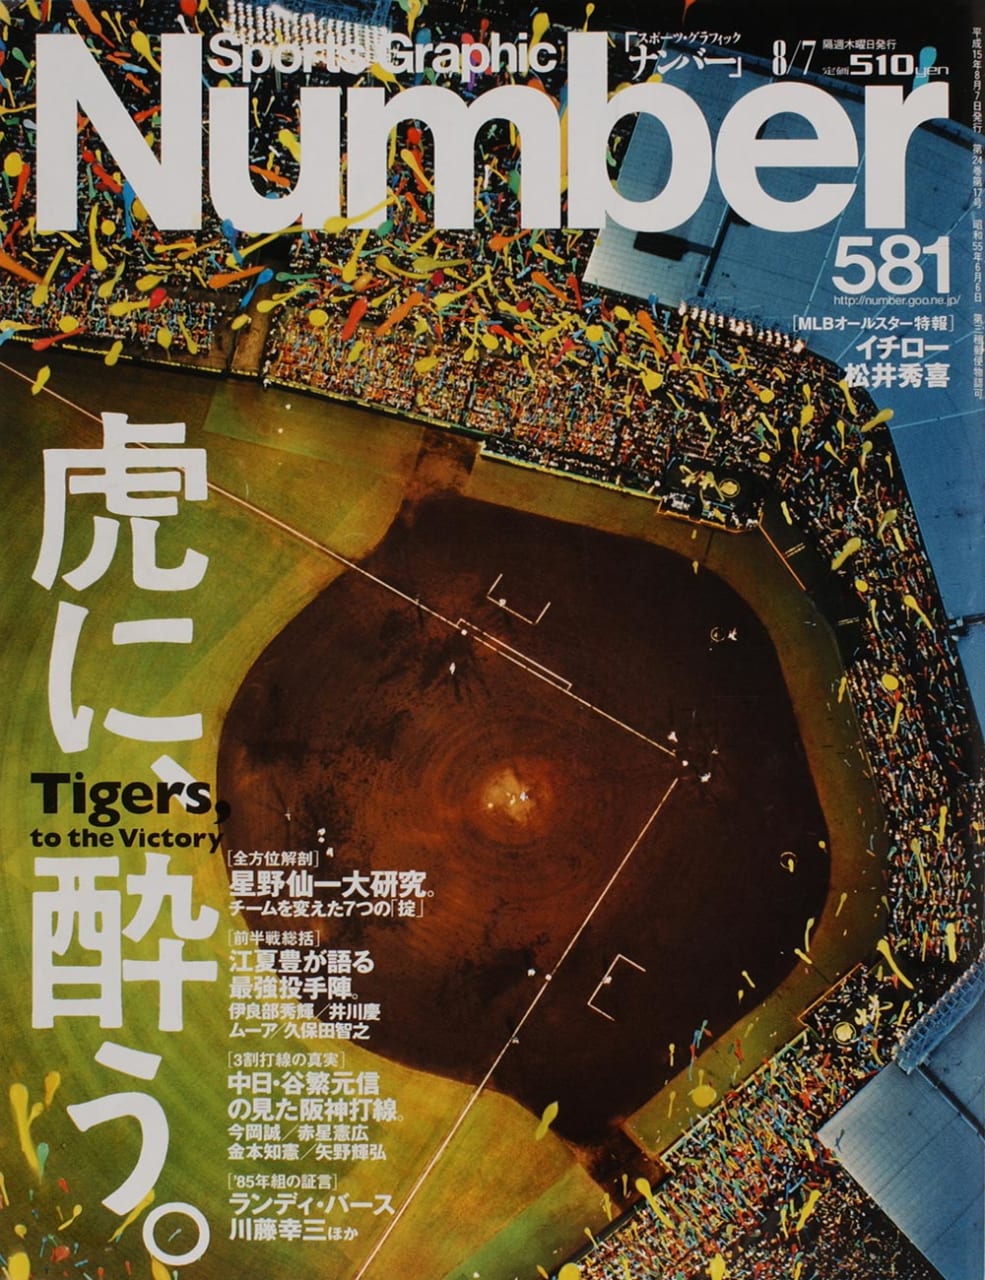 Sports Graphic Number 581号
2003年7月24日発売
大井成義＋矢部弘幸（マッハ55号）